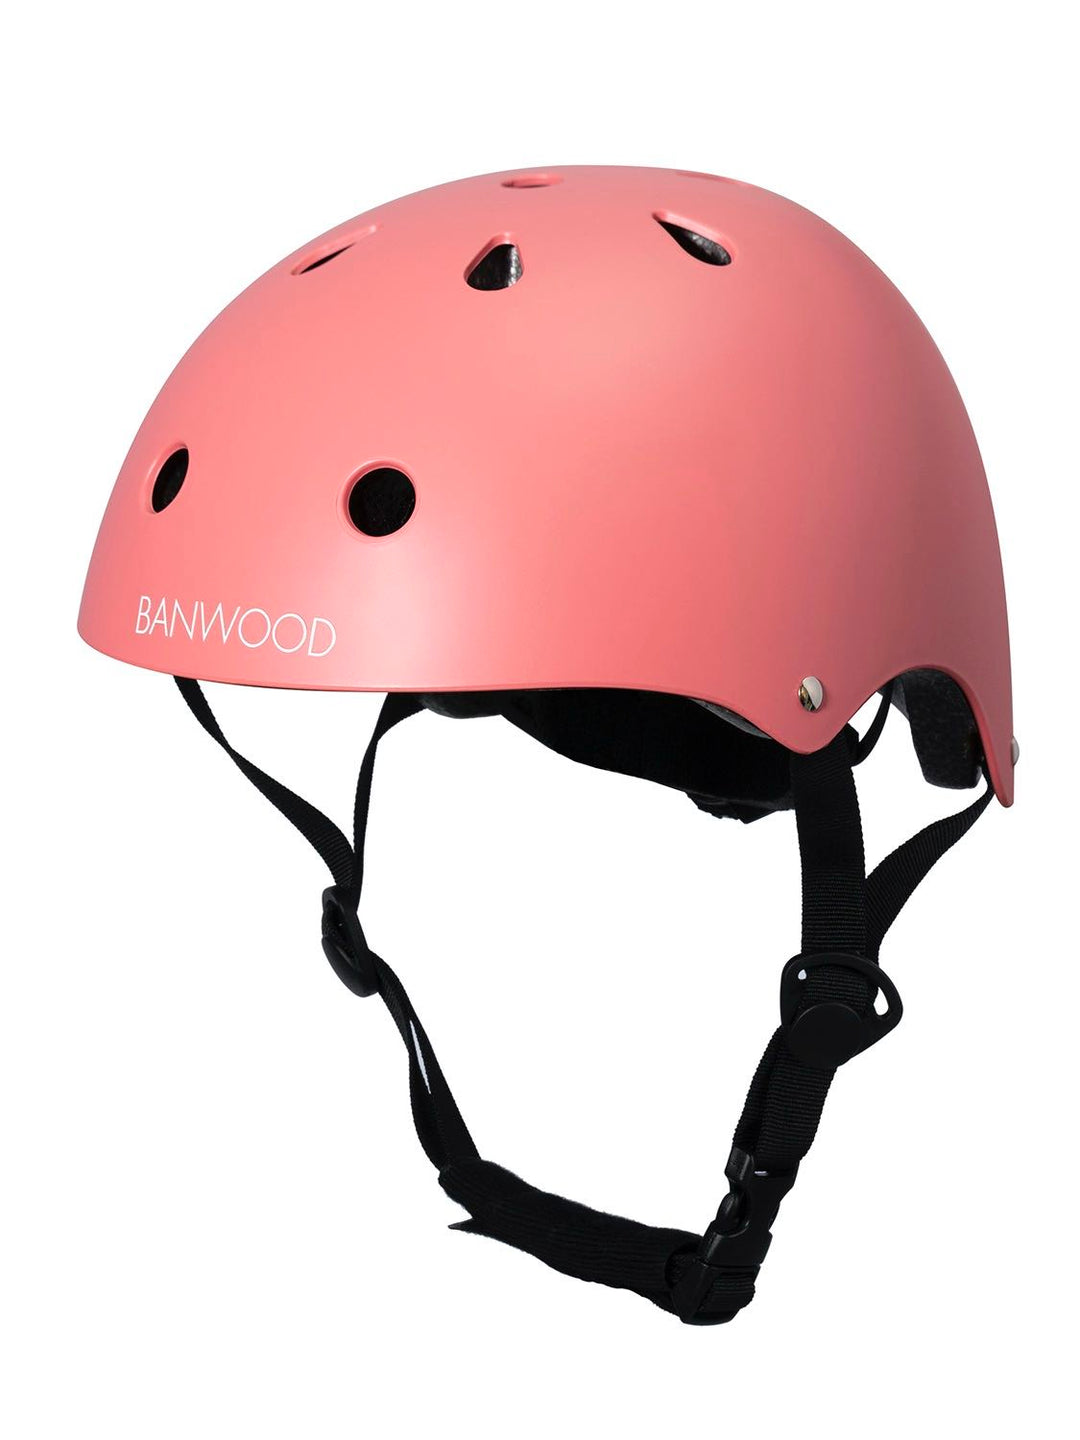 Banwood Classic Helmet in Coral